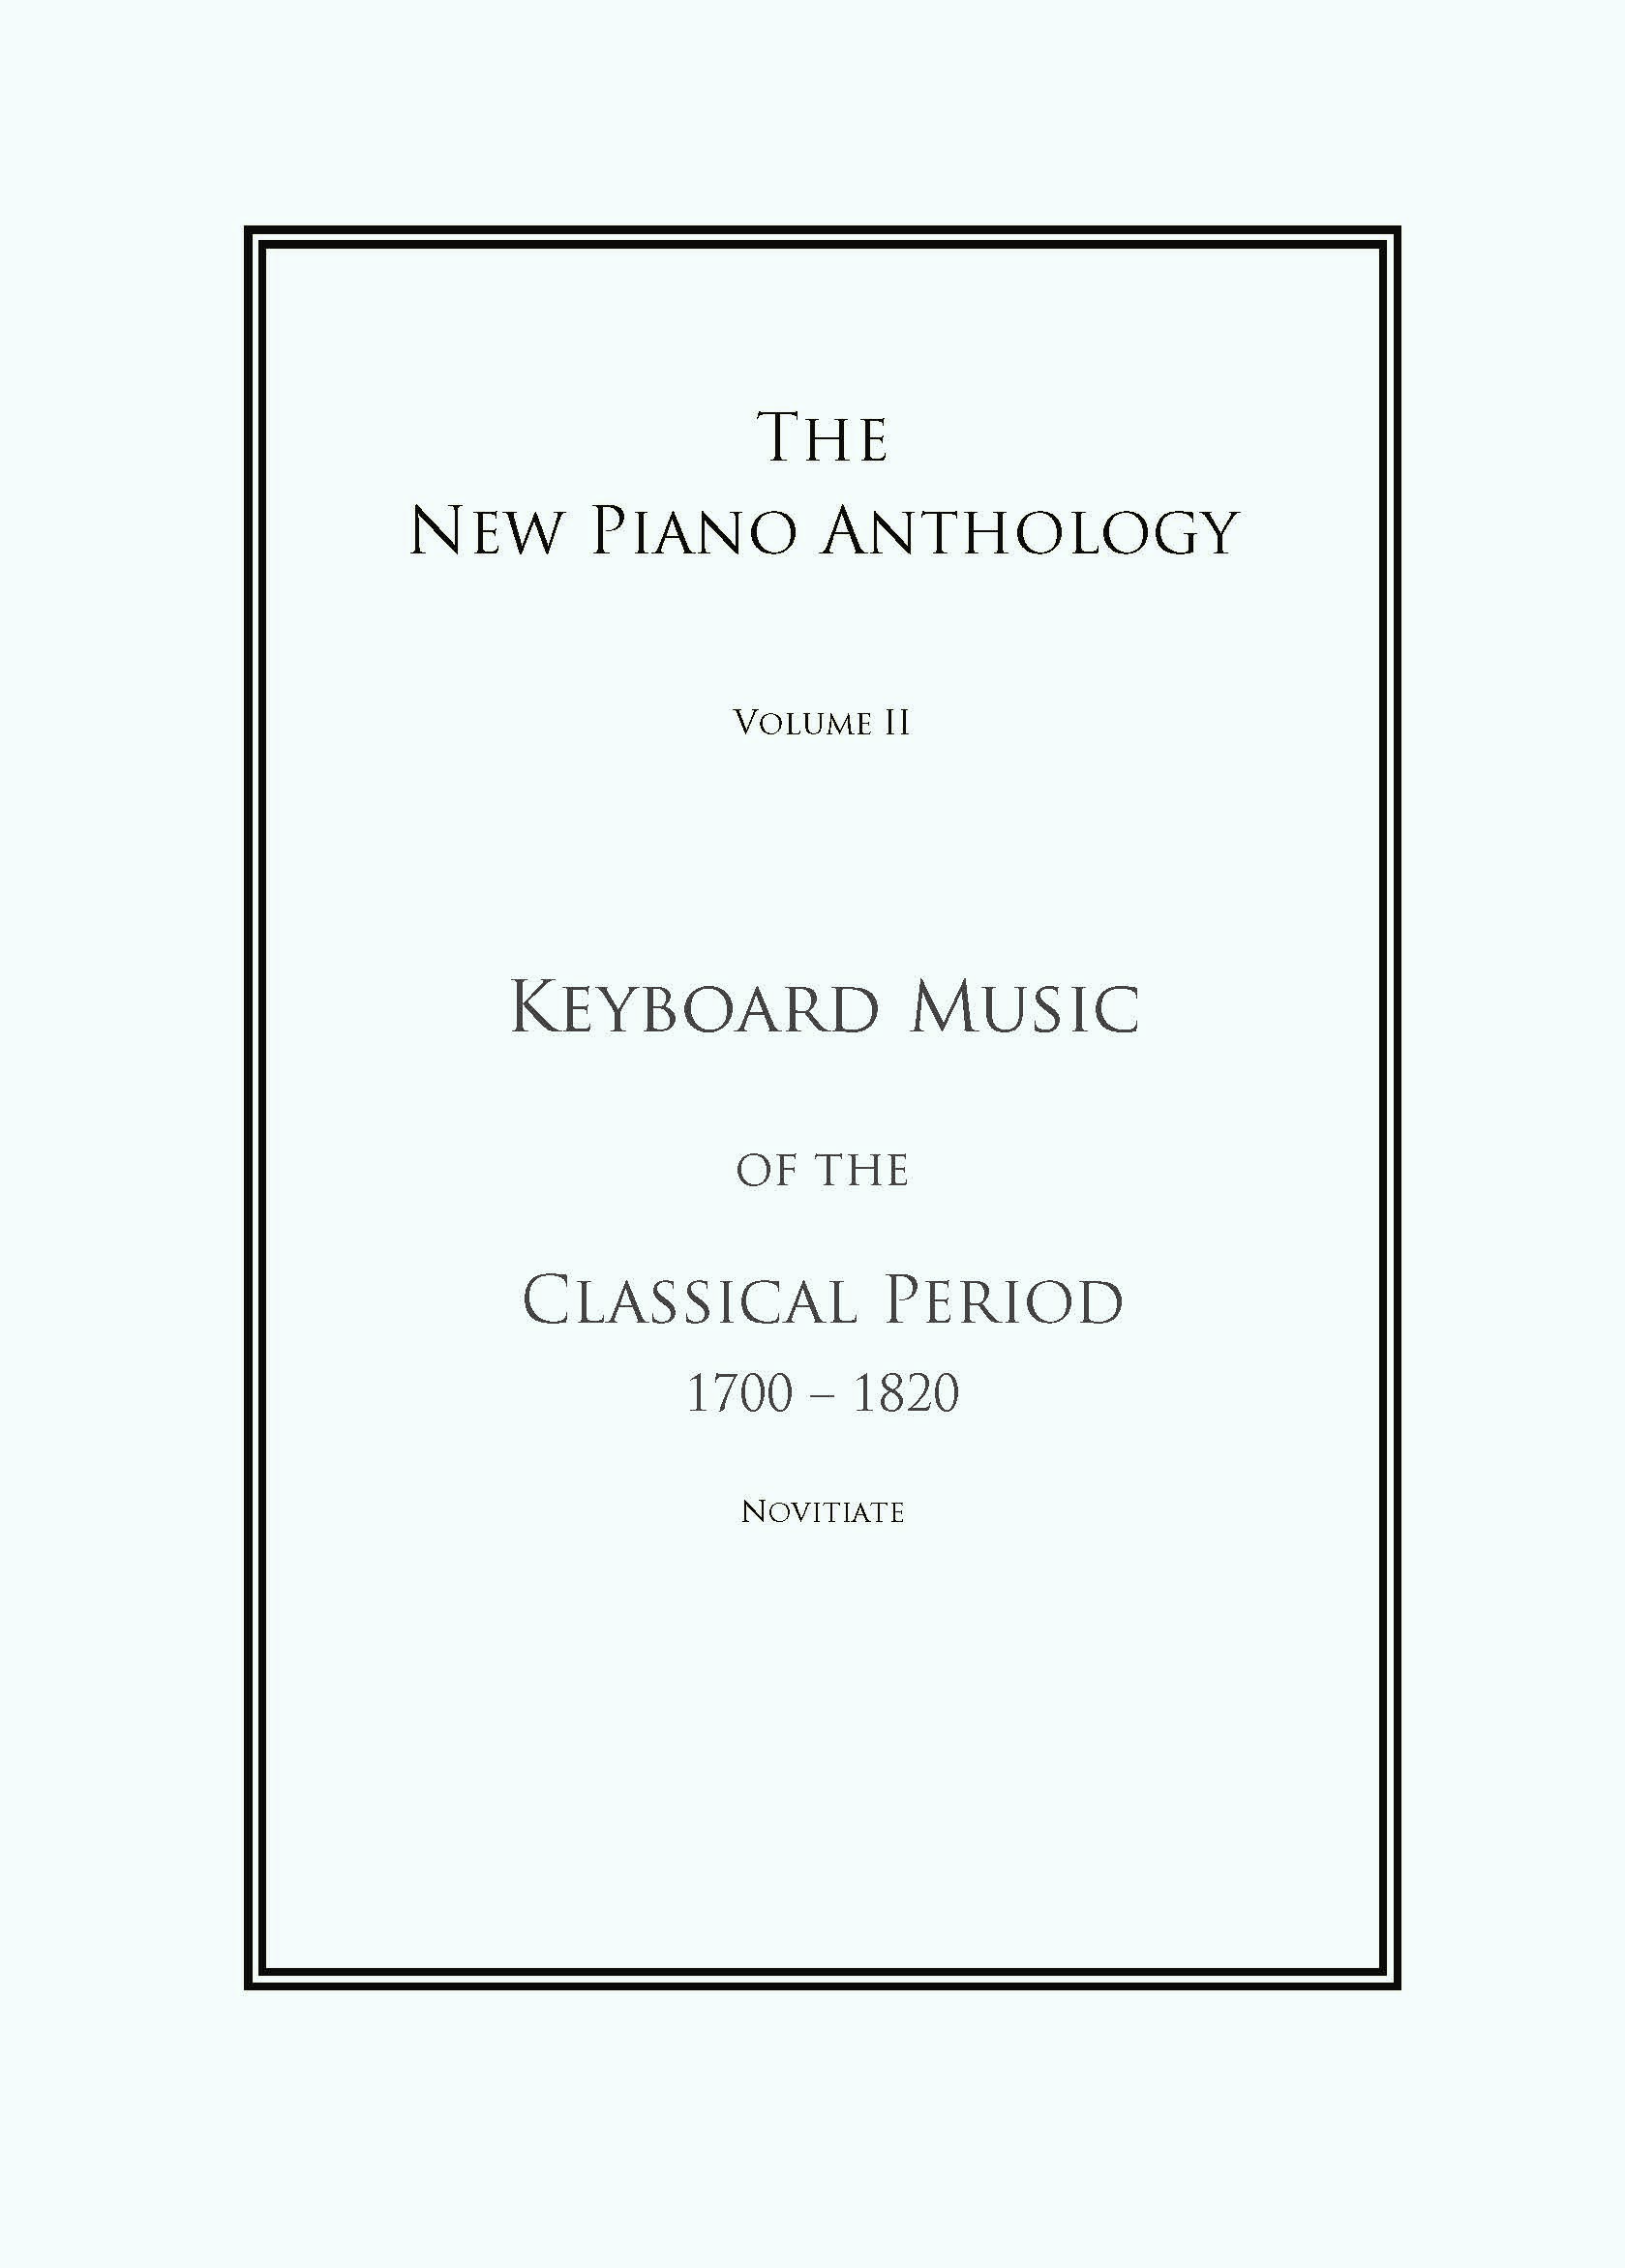 Keyboard Music of the Classical Period 1750 - 1820 (Novitiate)